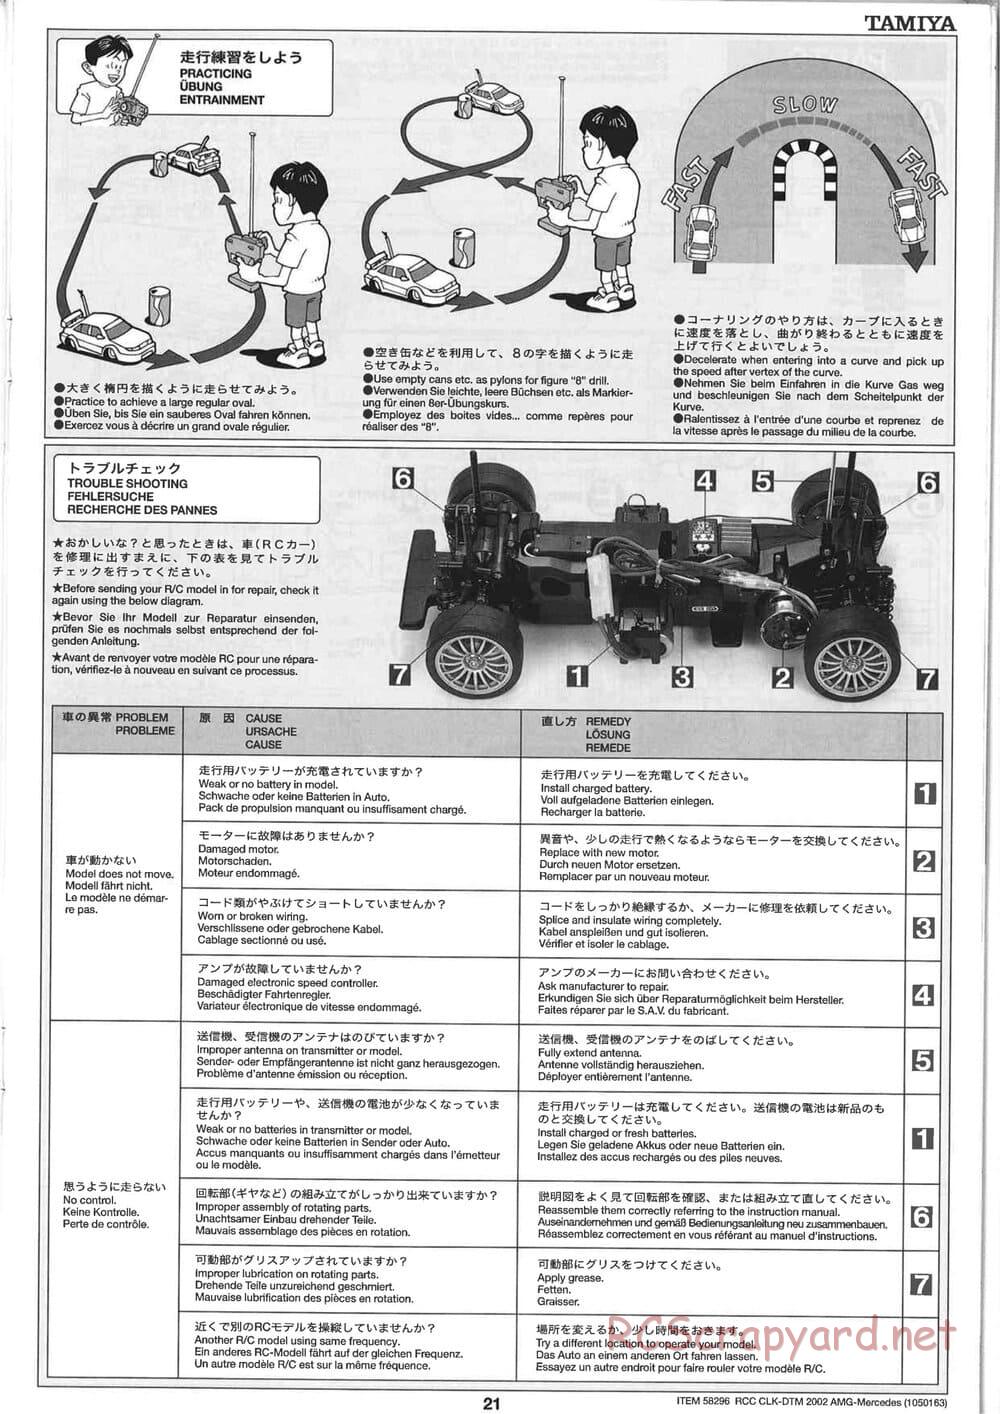 Tamiya - CLK DTM 2002 AMG Mercedes - TL-01 LA Chassis - Manual - Page 21